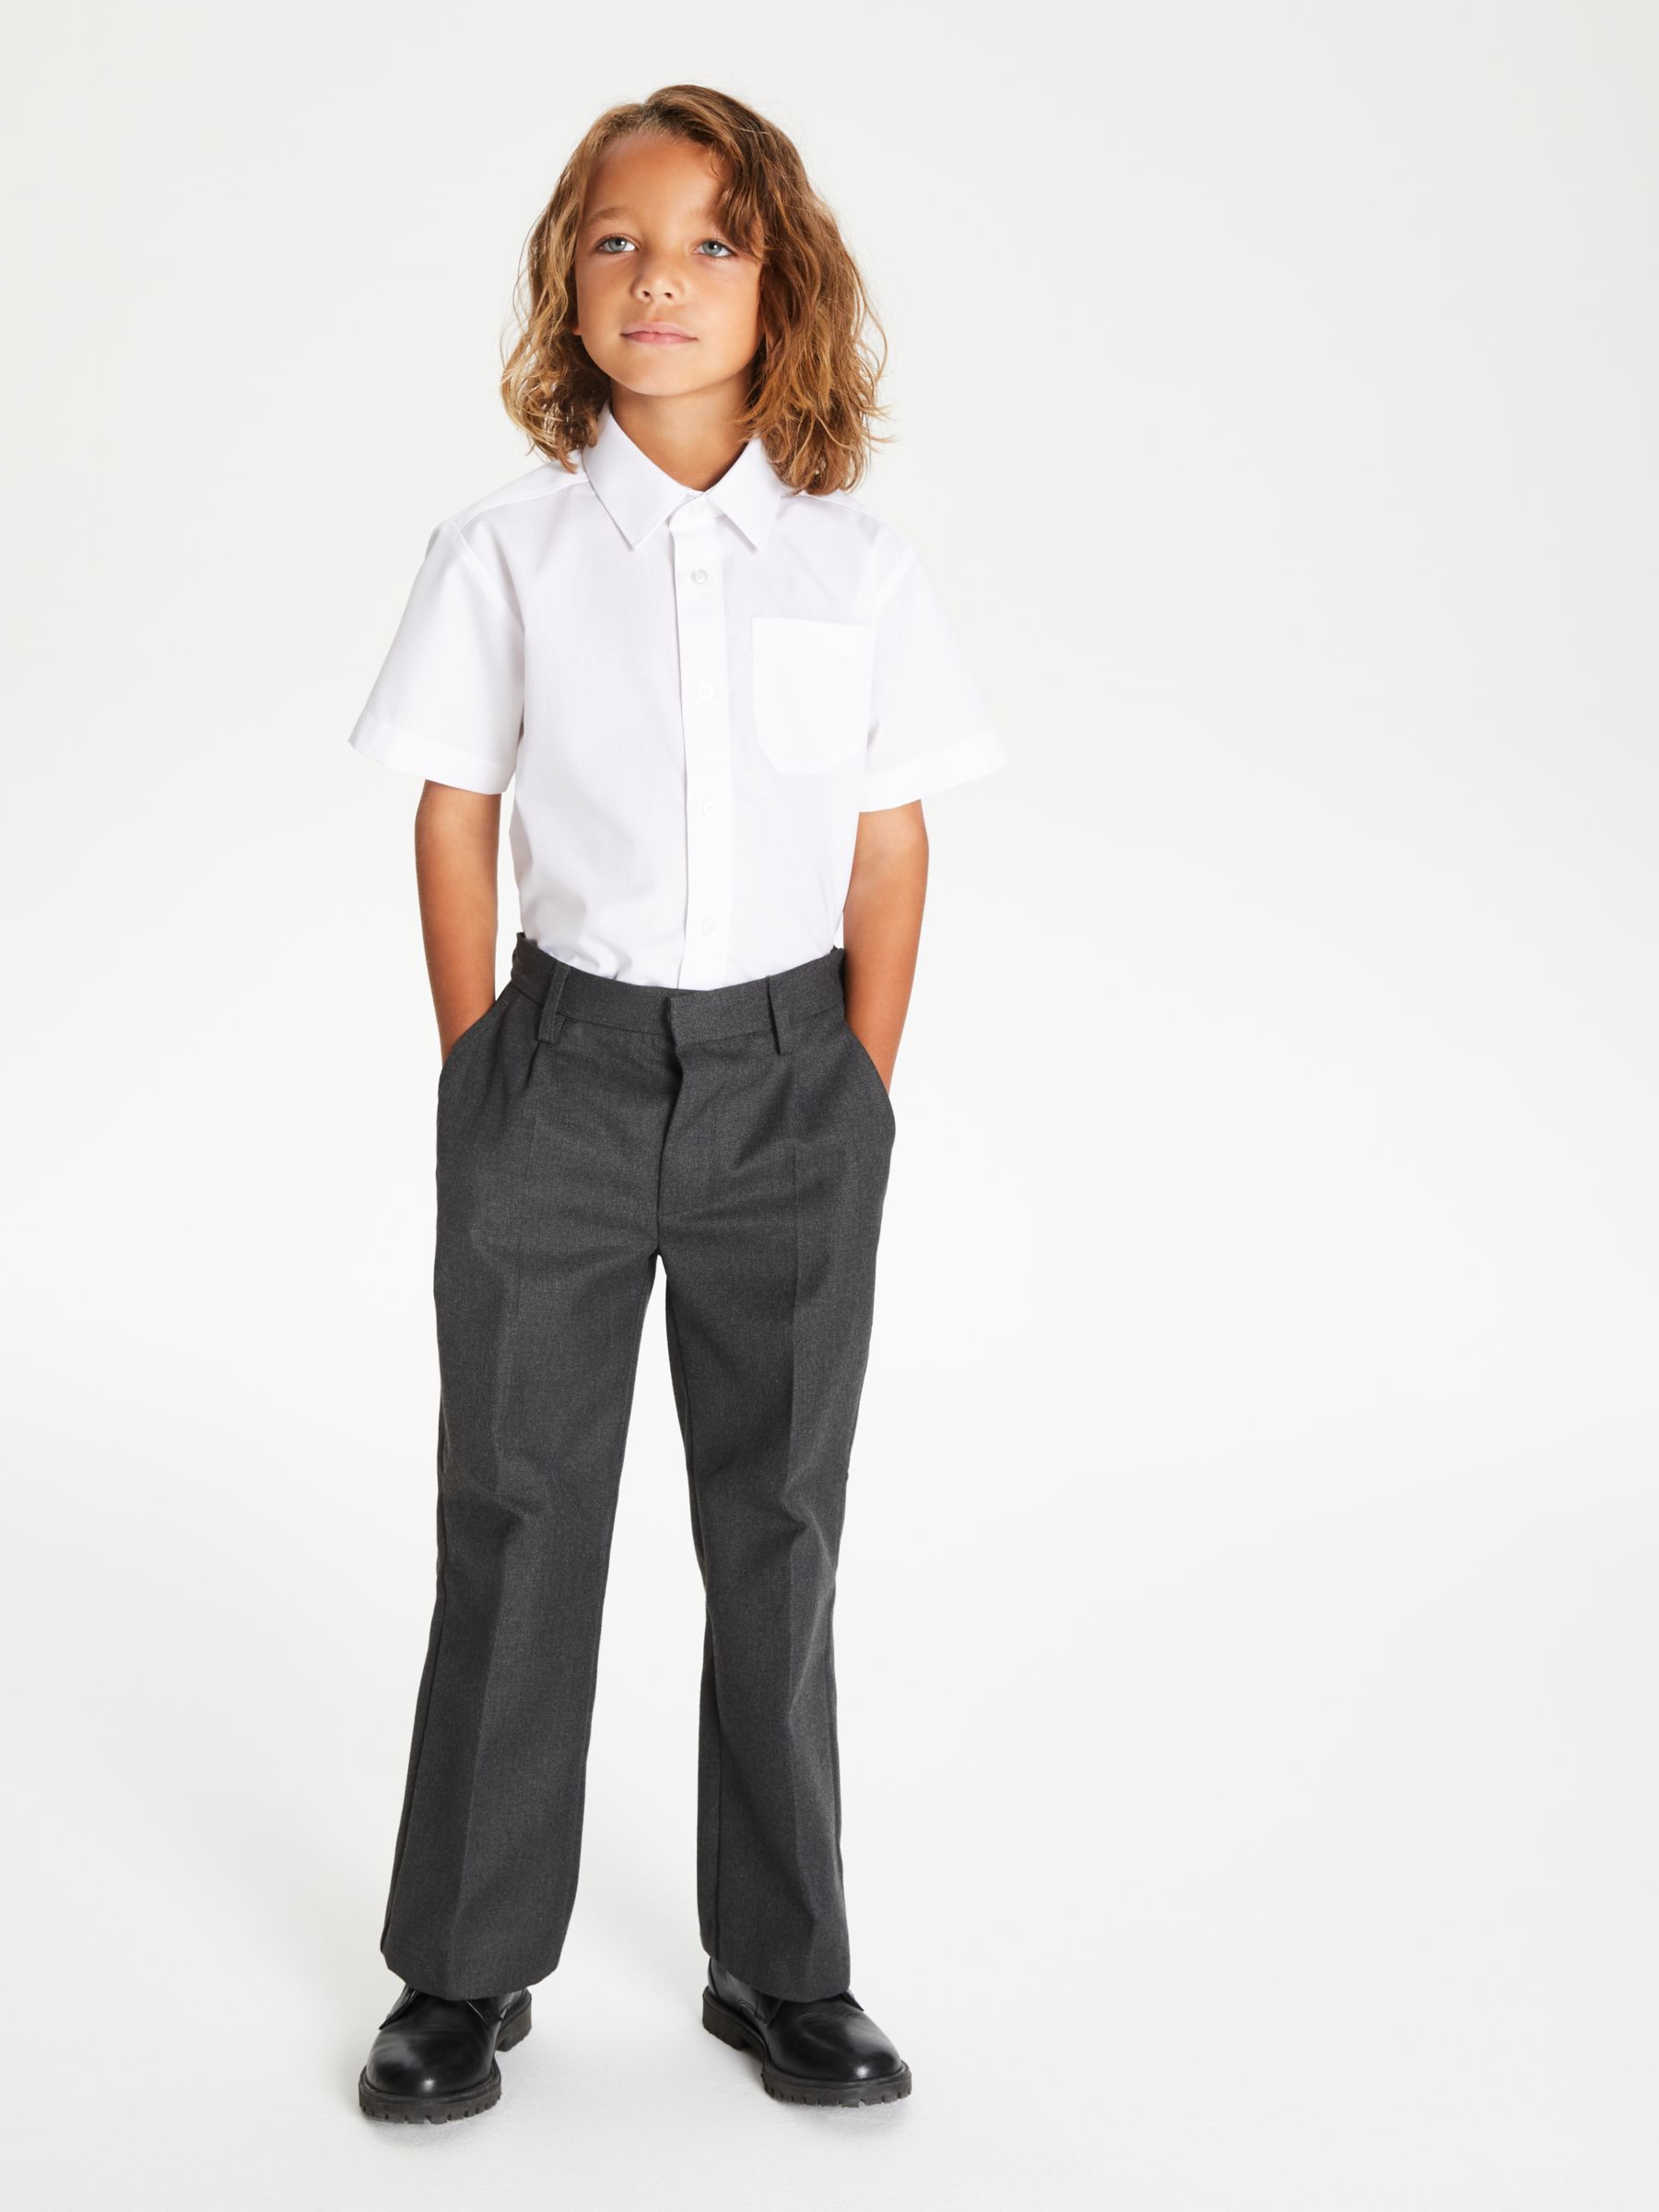 John Lewis & Partners The Basics Short Sleeve School Shirt, Pack of 3 ...